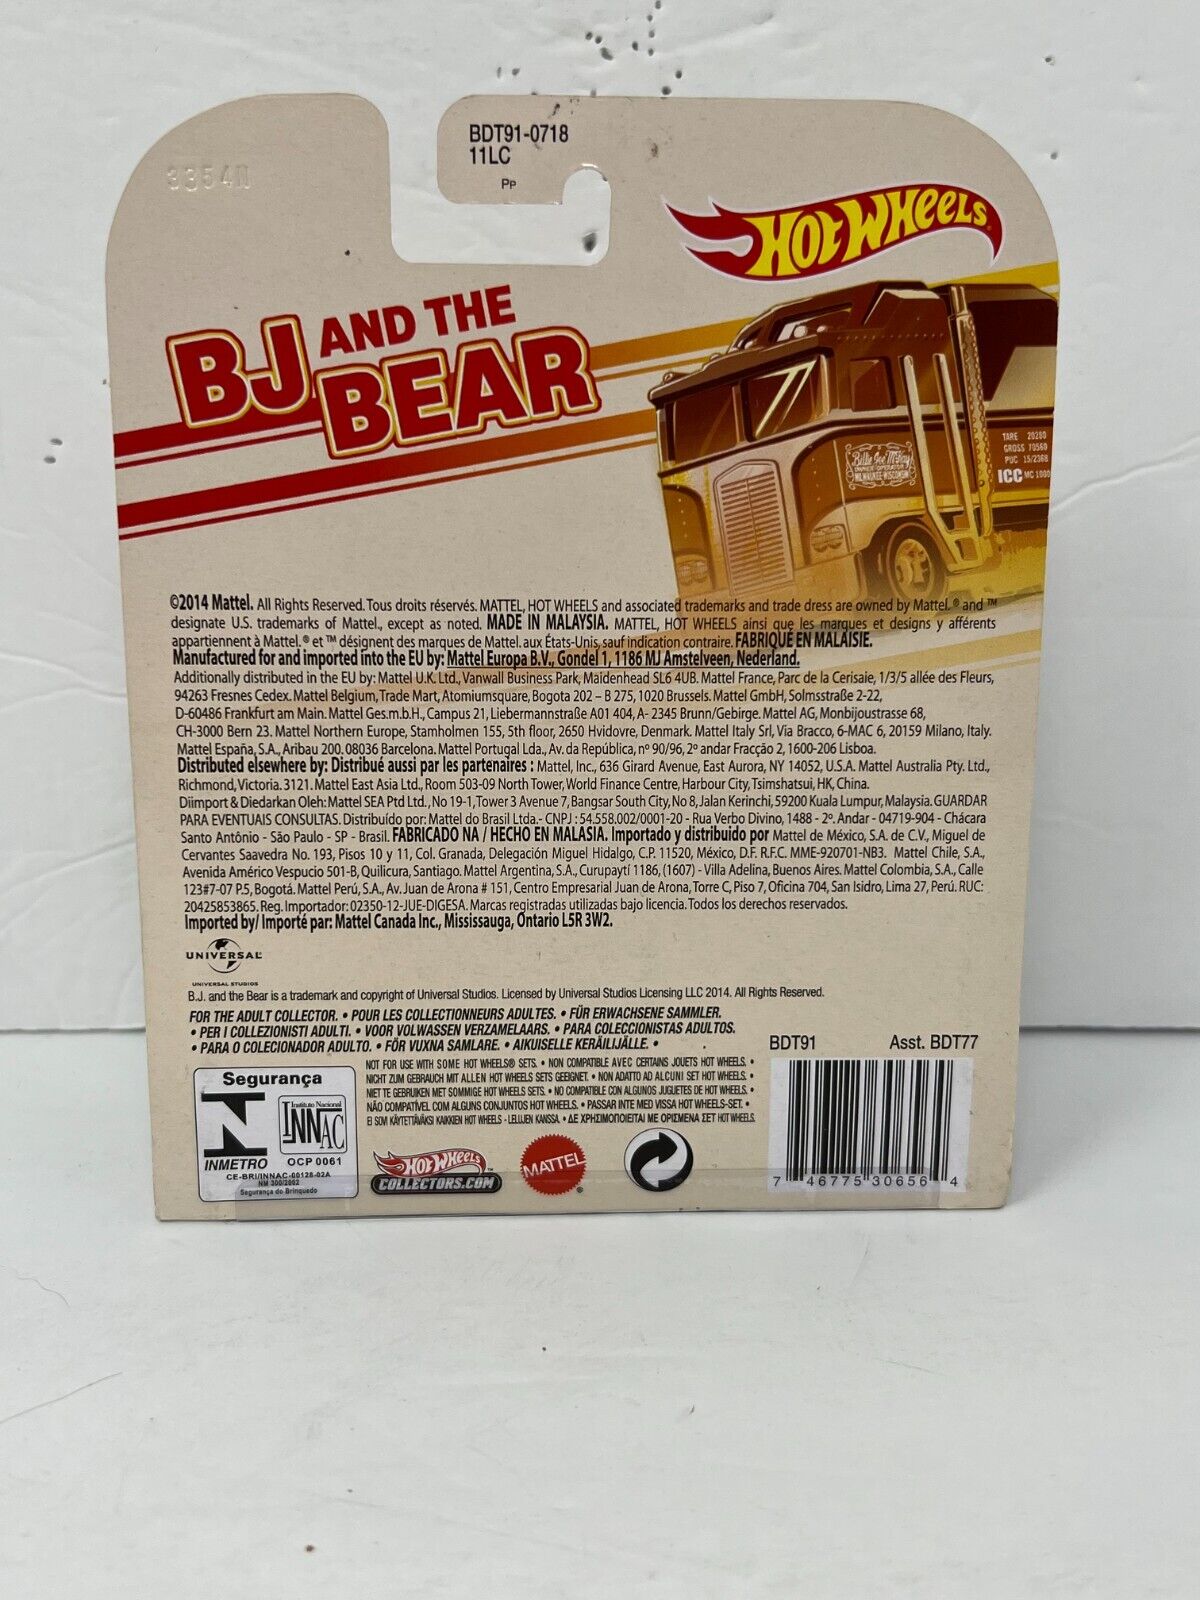 Hot Wheels Retro Entertainment BJ and the Bear Thunder Roller 1:64 Diecast